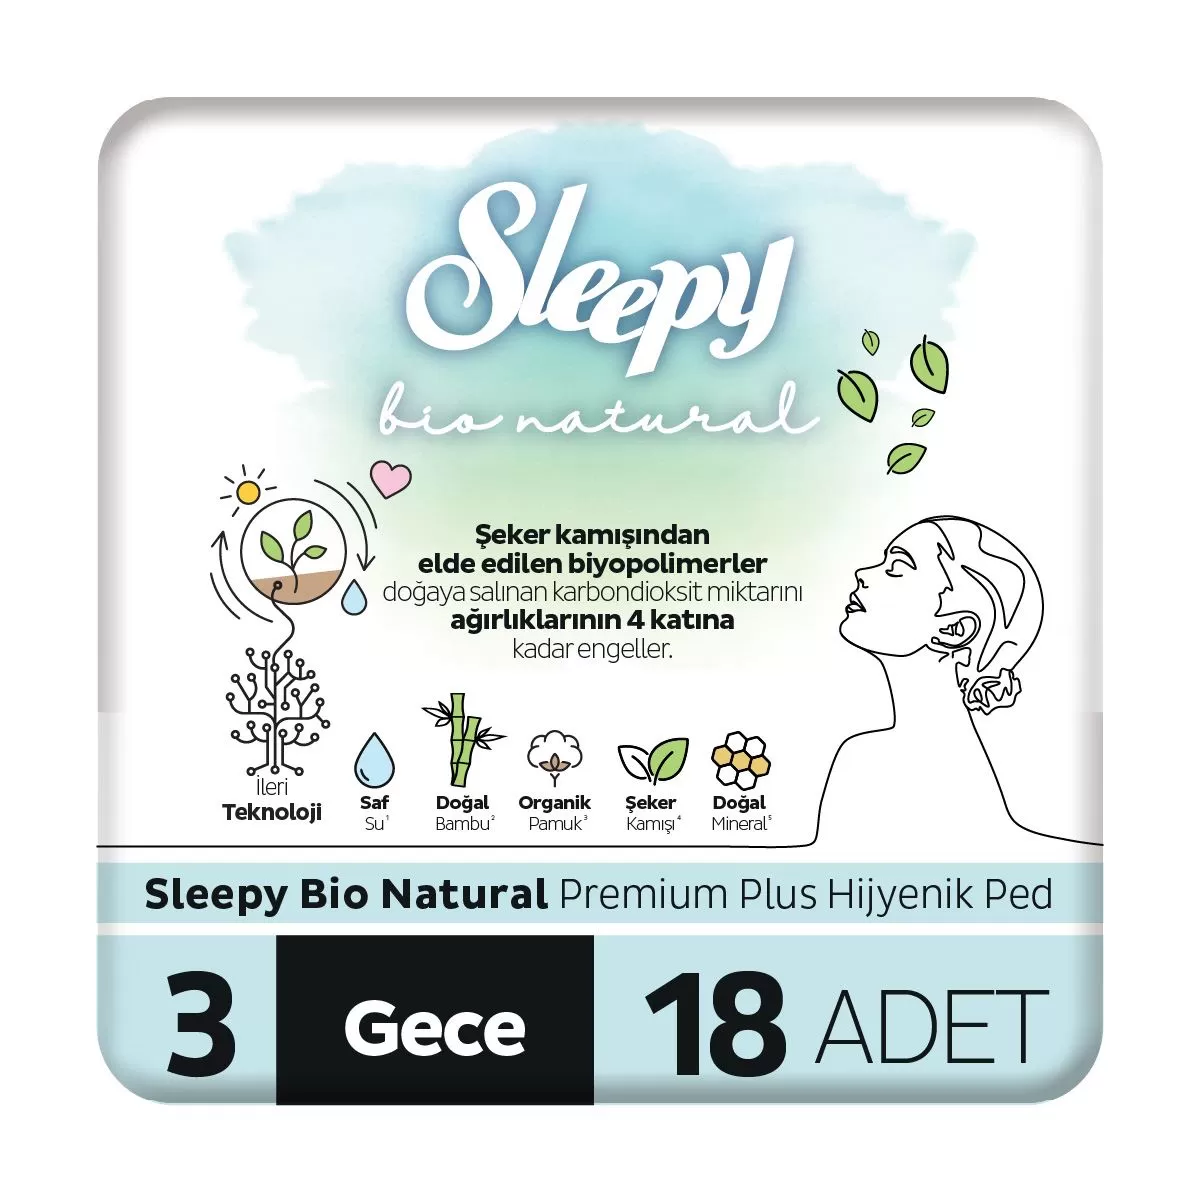 Sleepy Bio Natural Premium Plus Hijyenik Ped Gece 18x3 54 Adet Ped